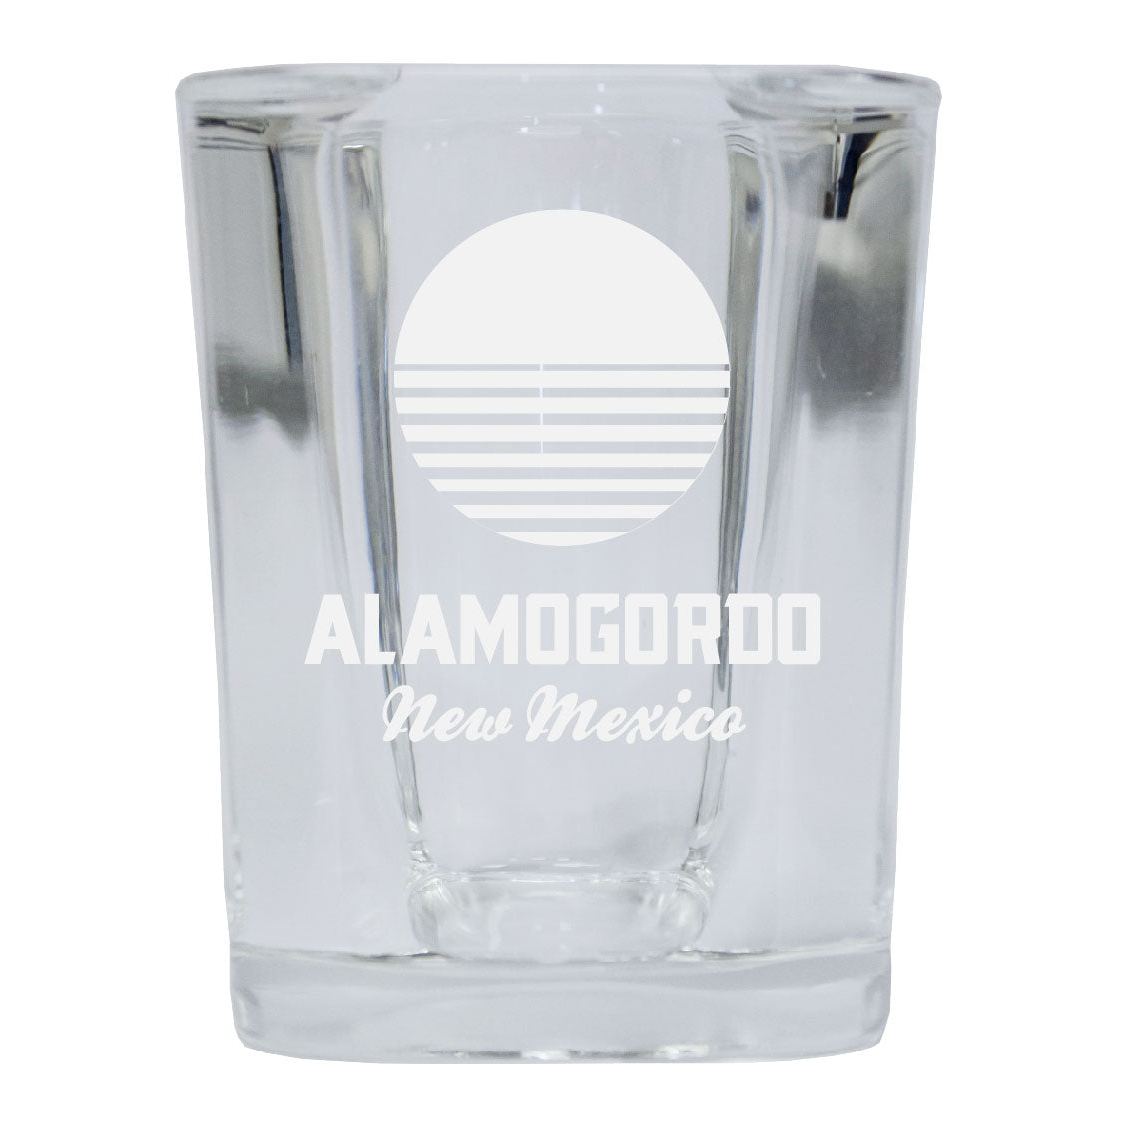 Alamogordo New Mexico Souvenir Laser Engraved 2 Ounce Square Base Liquor Shot Glass Choice Of Design - Design 2